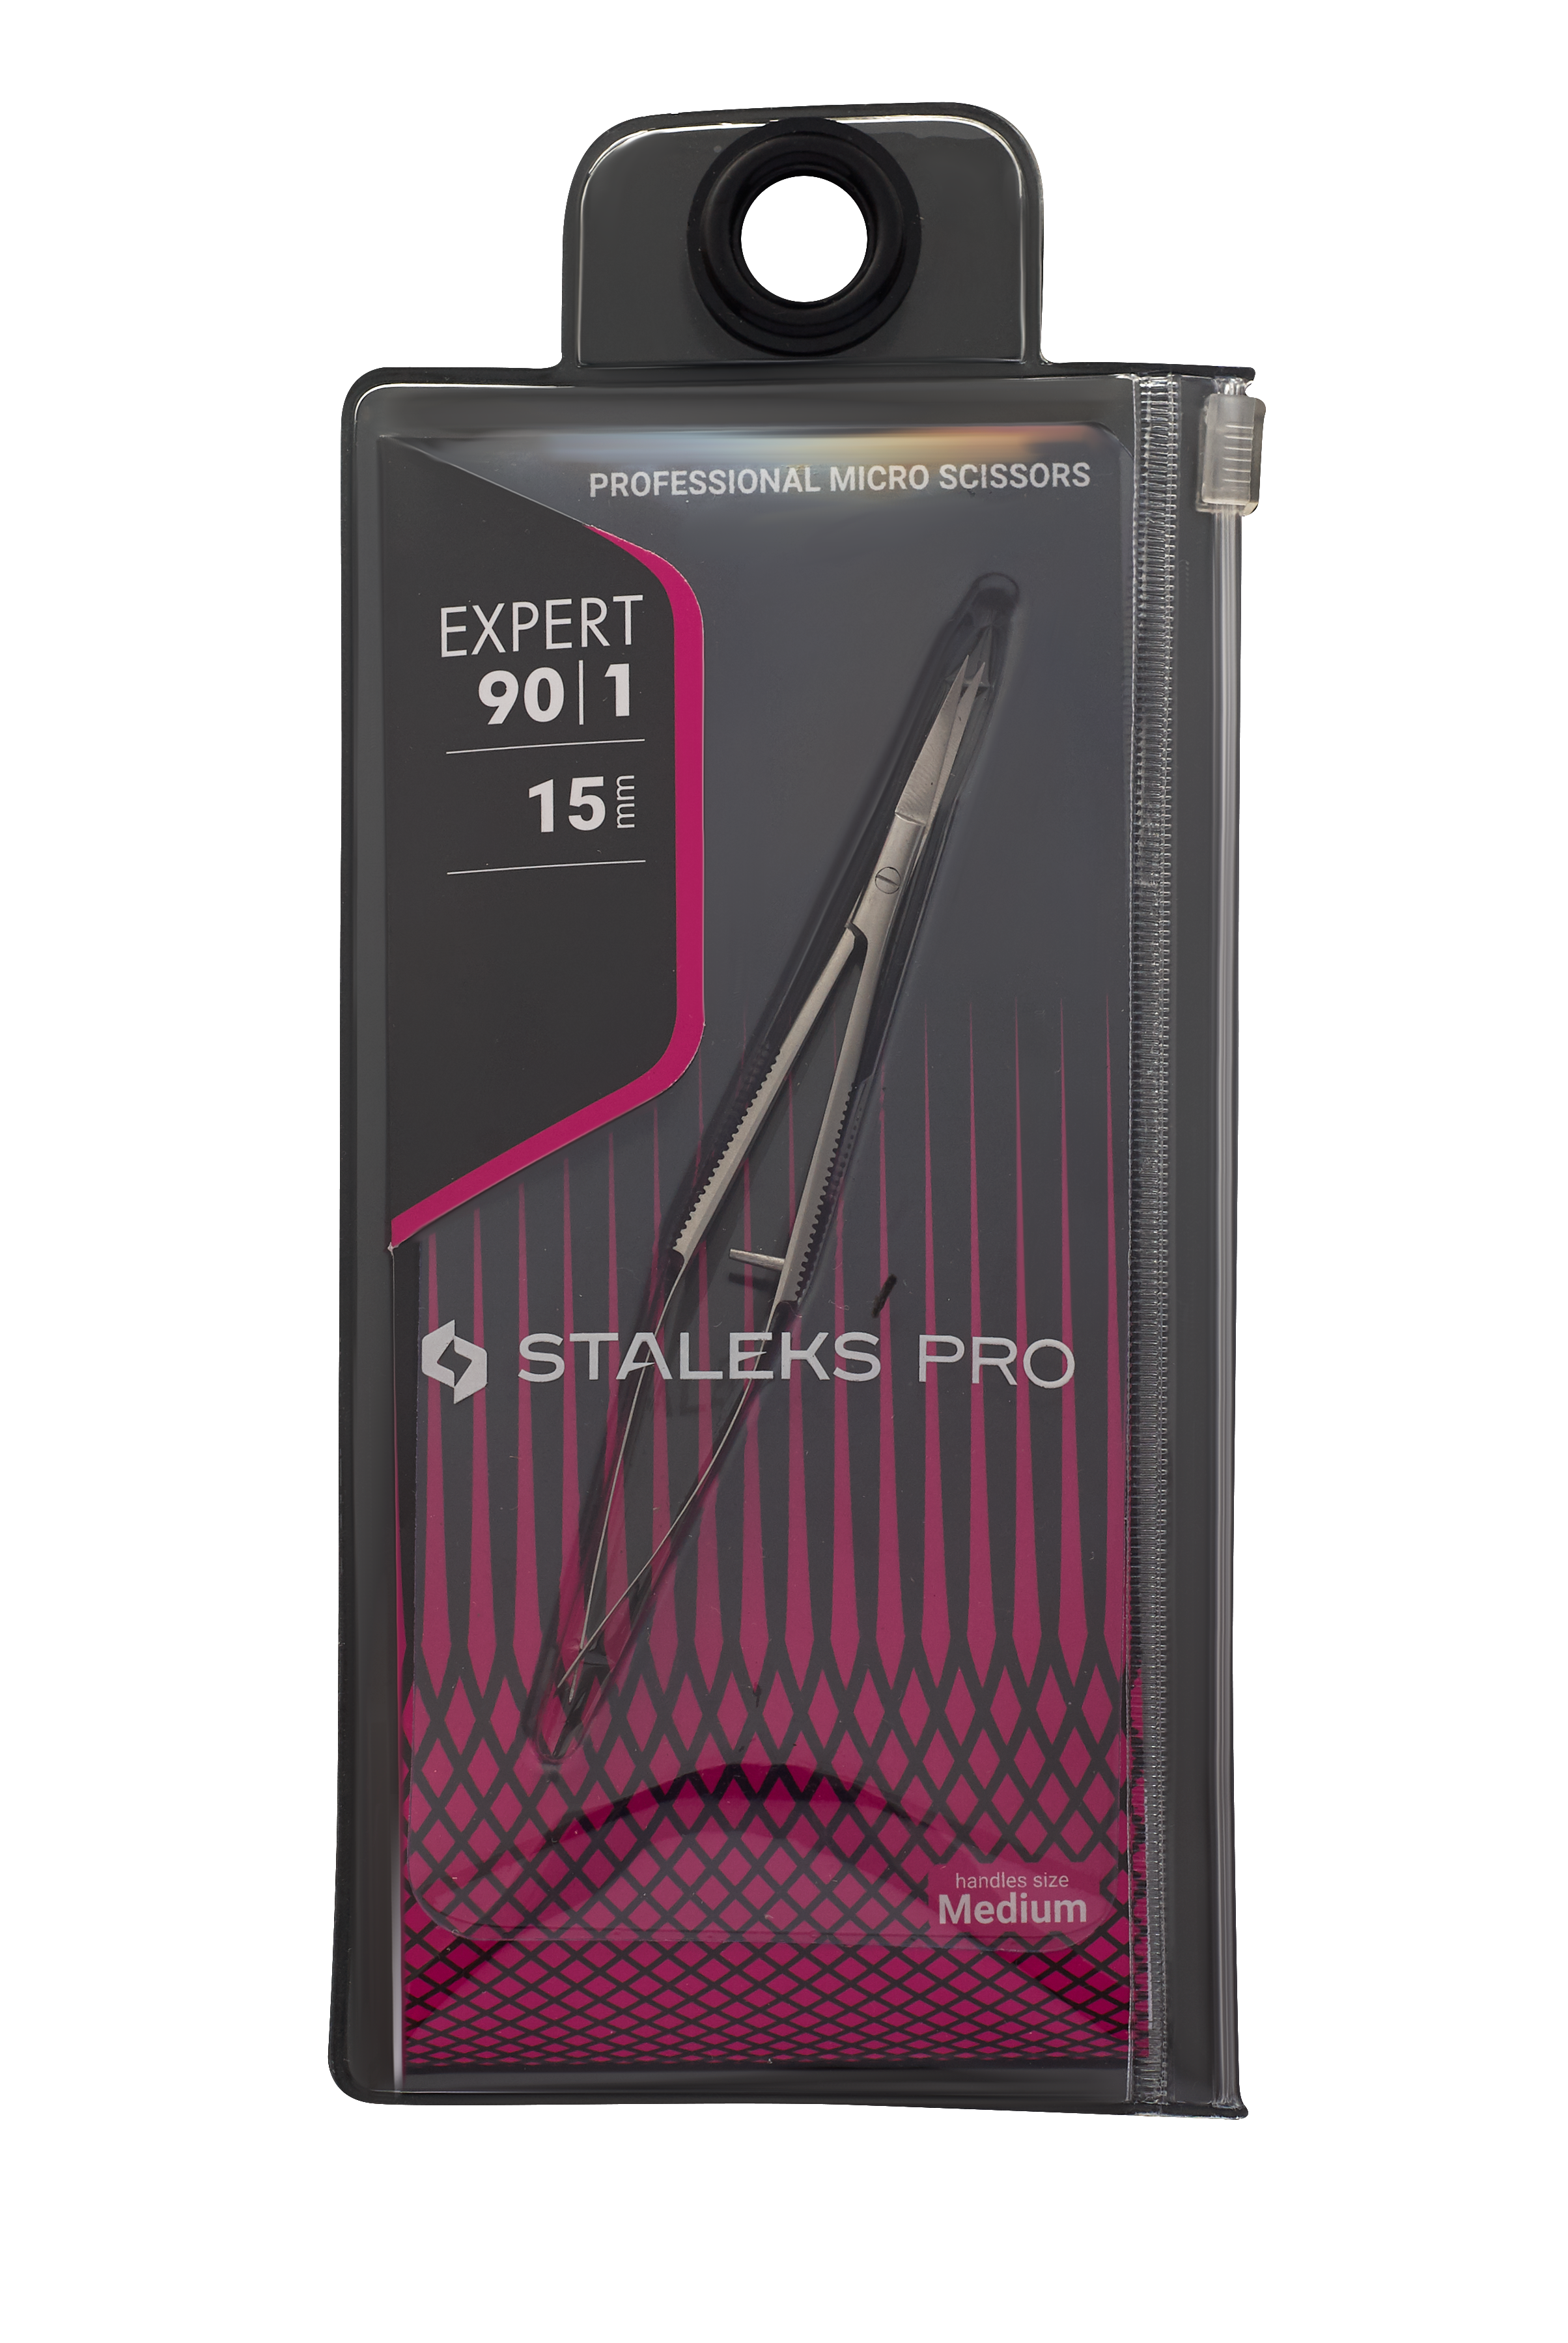 Staleks Pro Expert 90 Type 1 15mm Micro Scissors SE-90/1